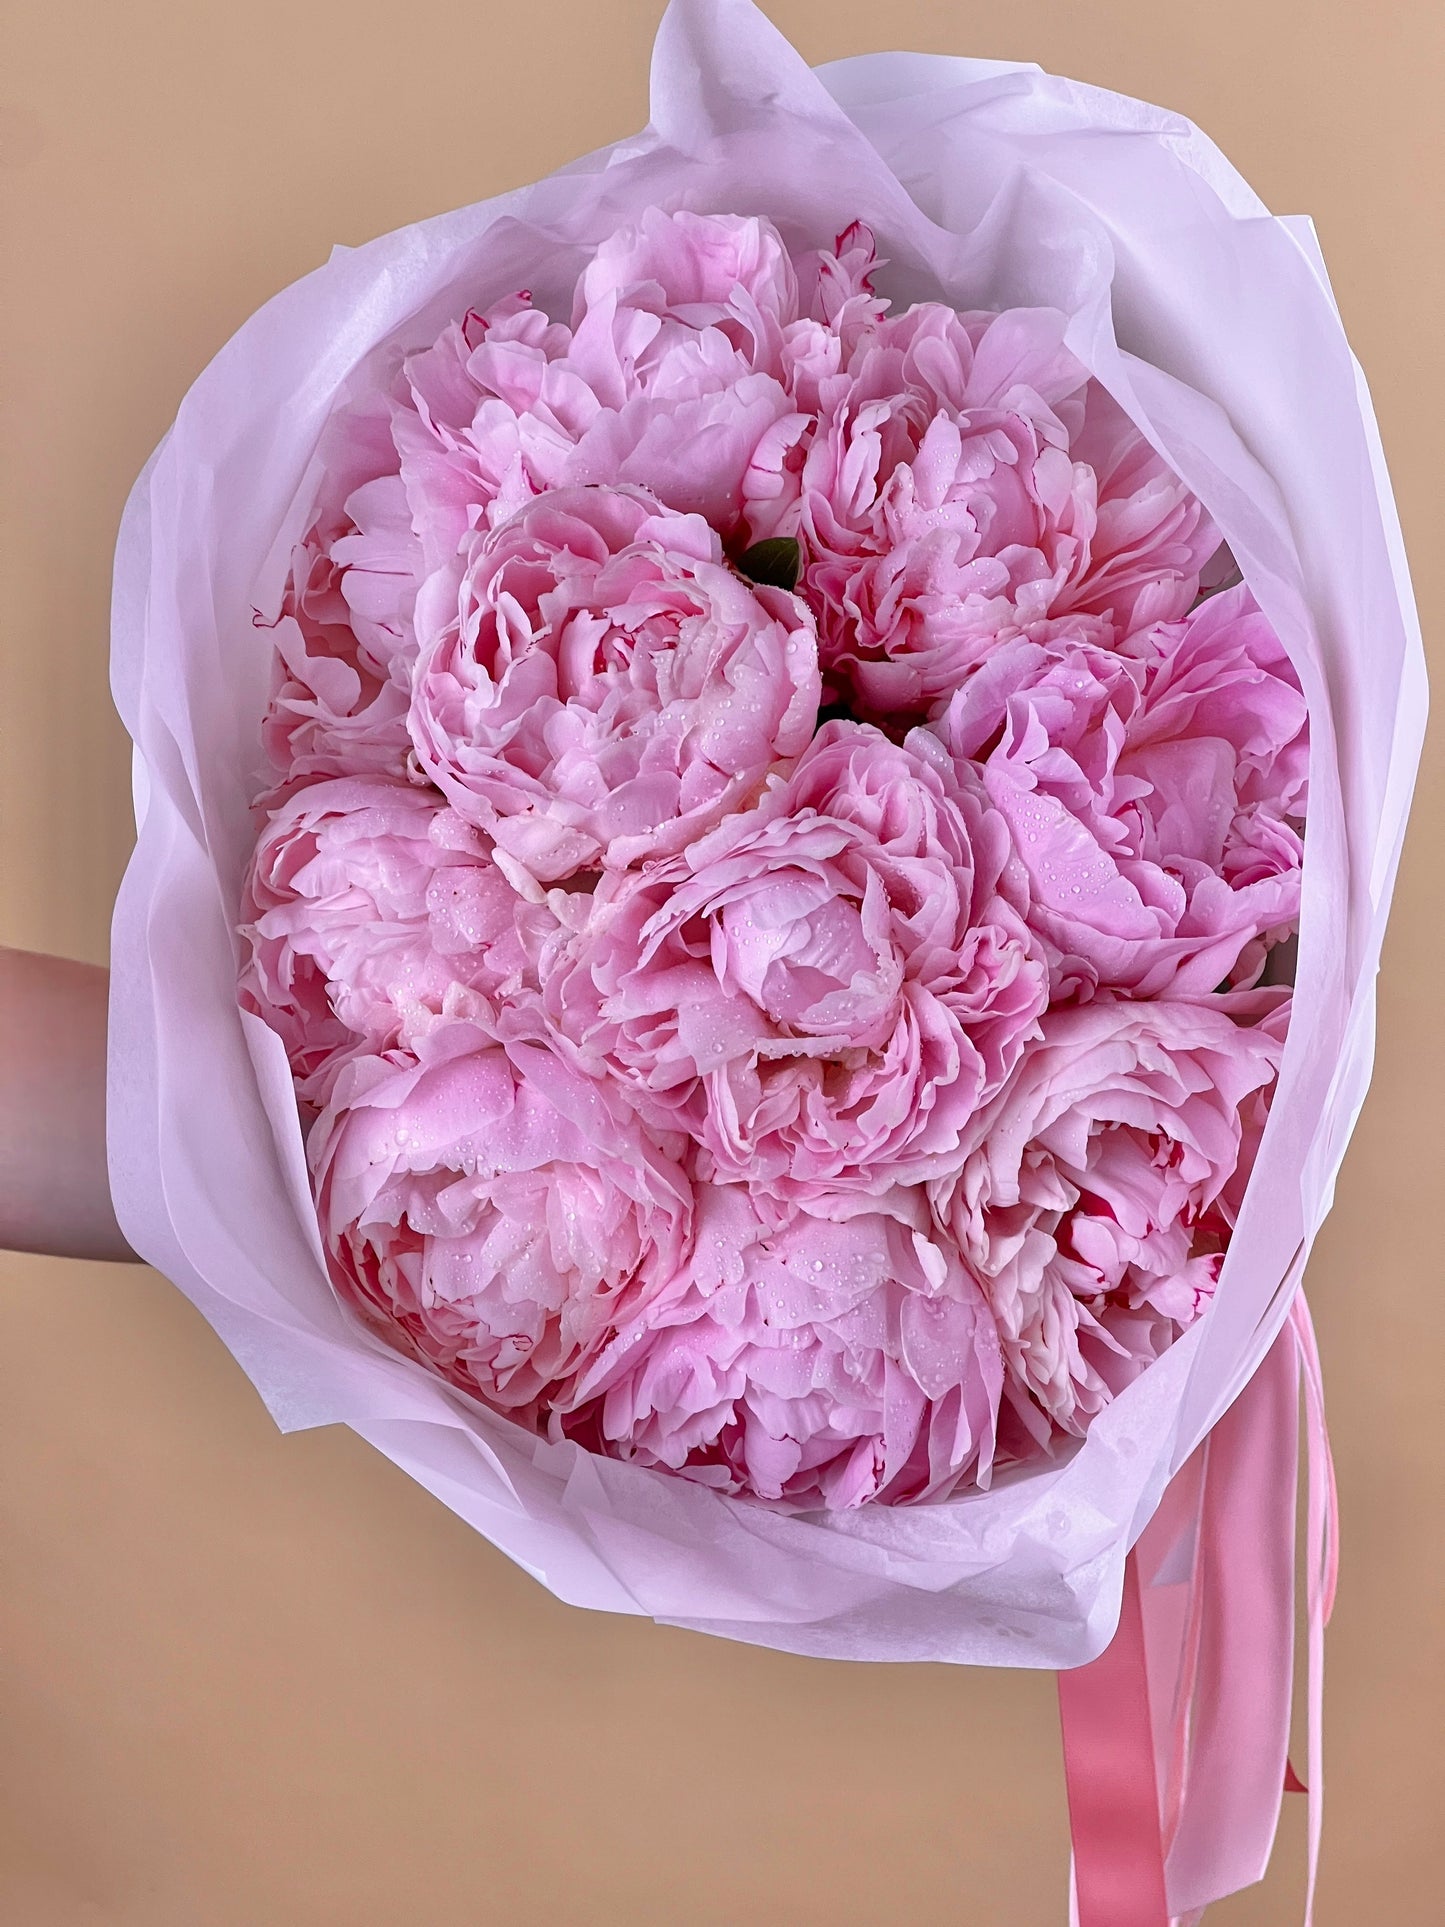 Poetic Peonies-Flower-Delivery-Gold-Coast-Florist-Flowers Gold Coast-5 Stems-Light pink-https://www.flowersgoldcoast.com.au-best-florist